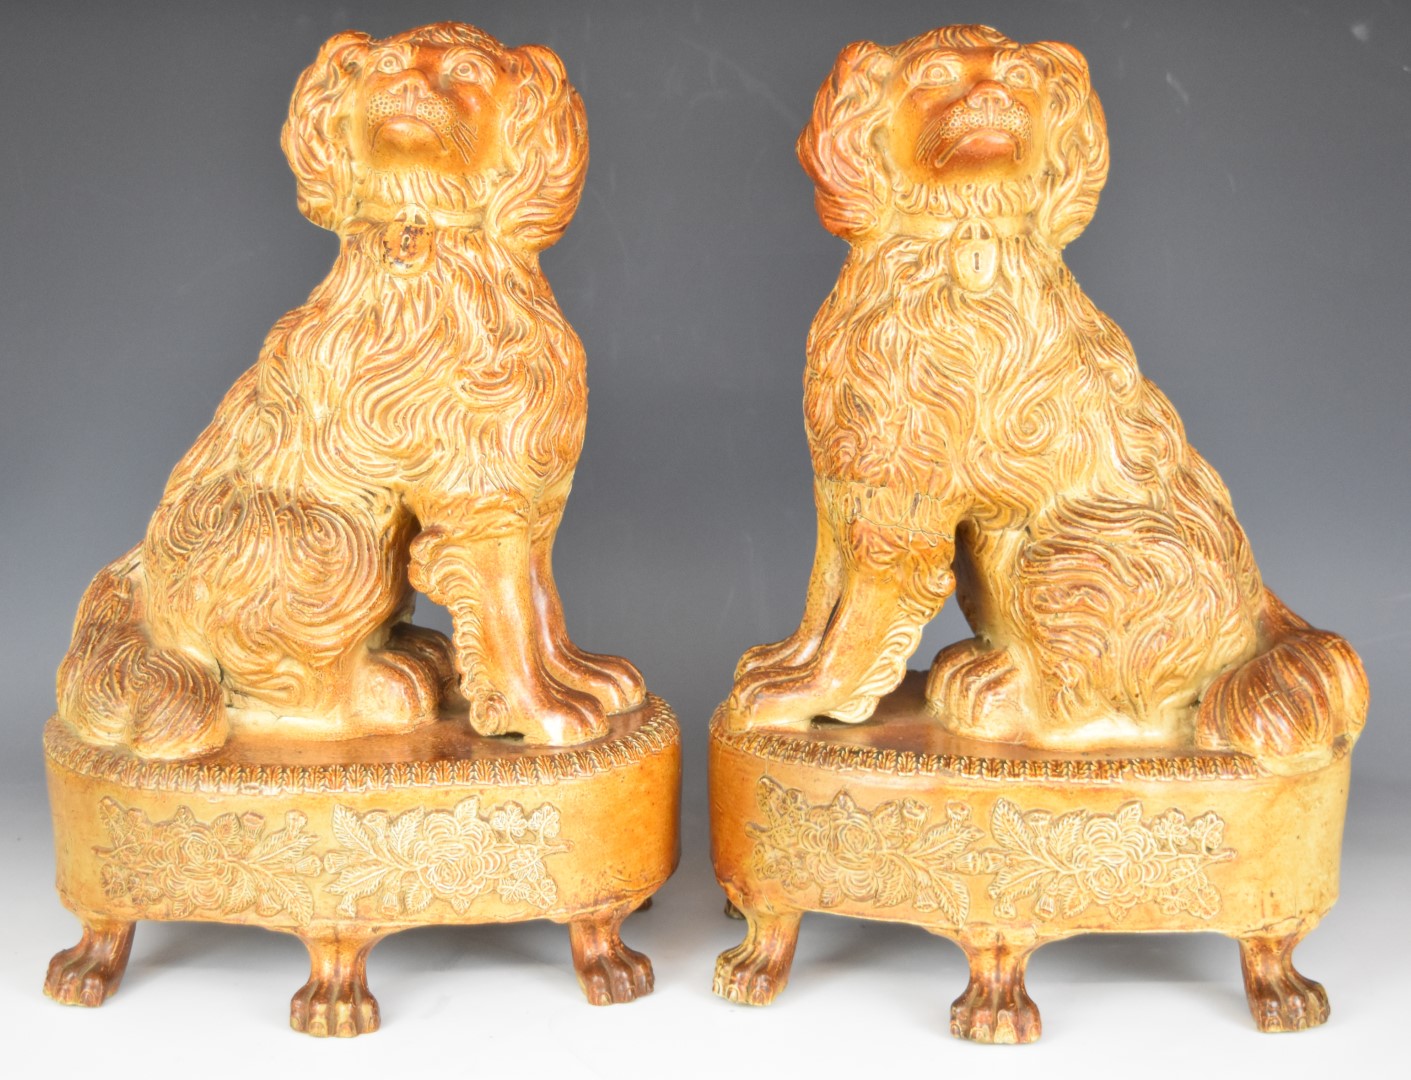 Pair of 19thC S and H Briddon, Brampton brown salt glazed stoneware spaniels / dogs with padlock